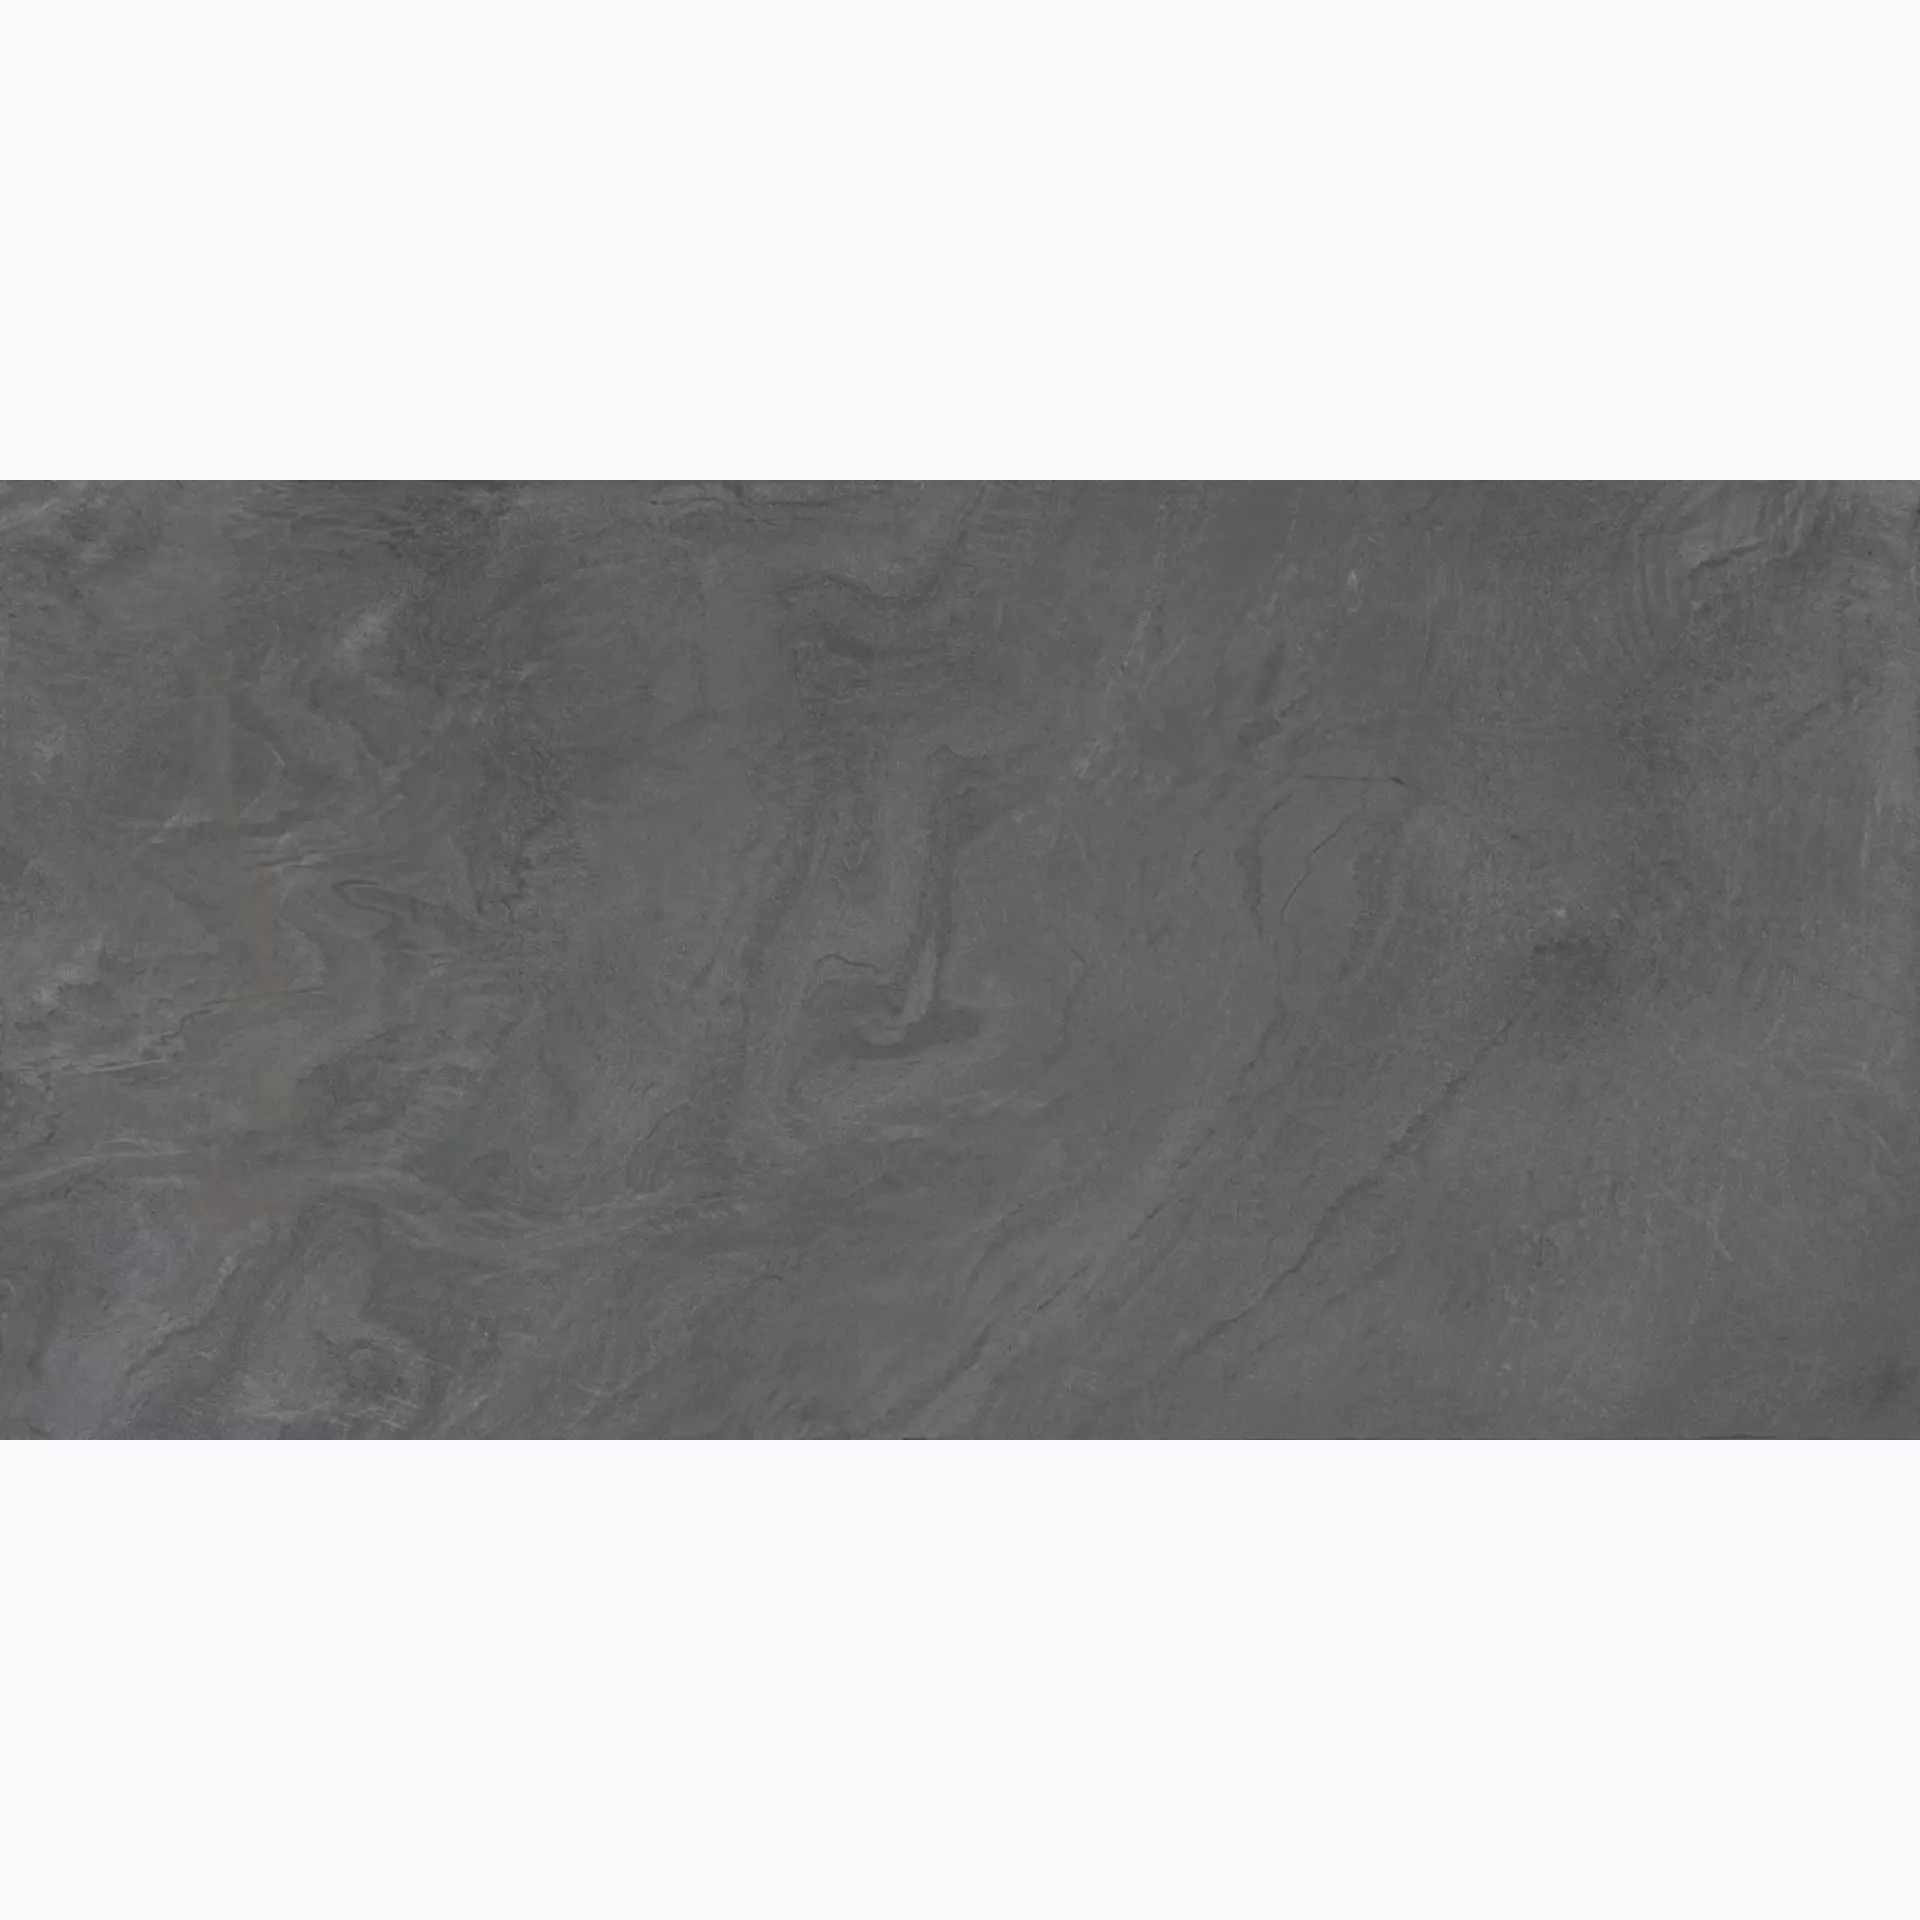 Diesel Liquid Stone Black Antislip 892740 60x120cm rectified 9mm